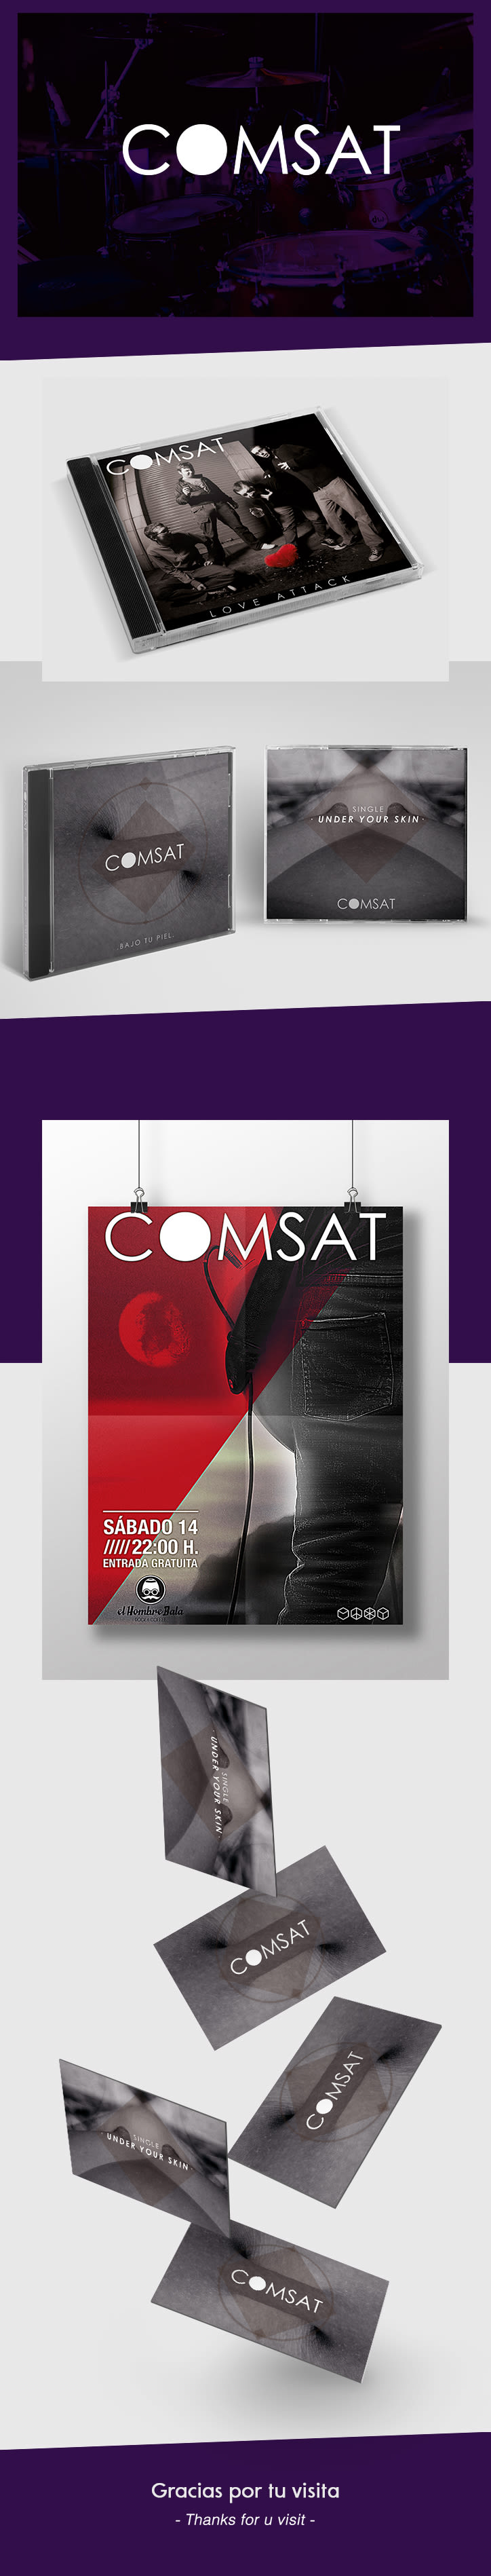 COMSAT -1